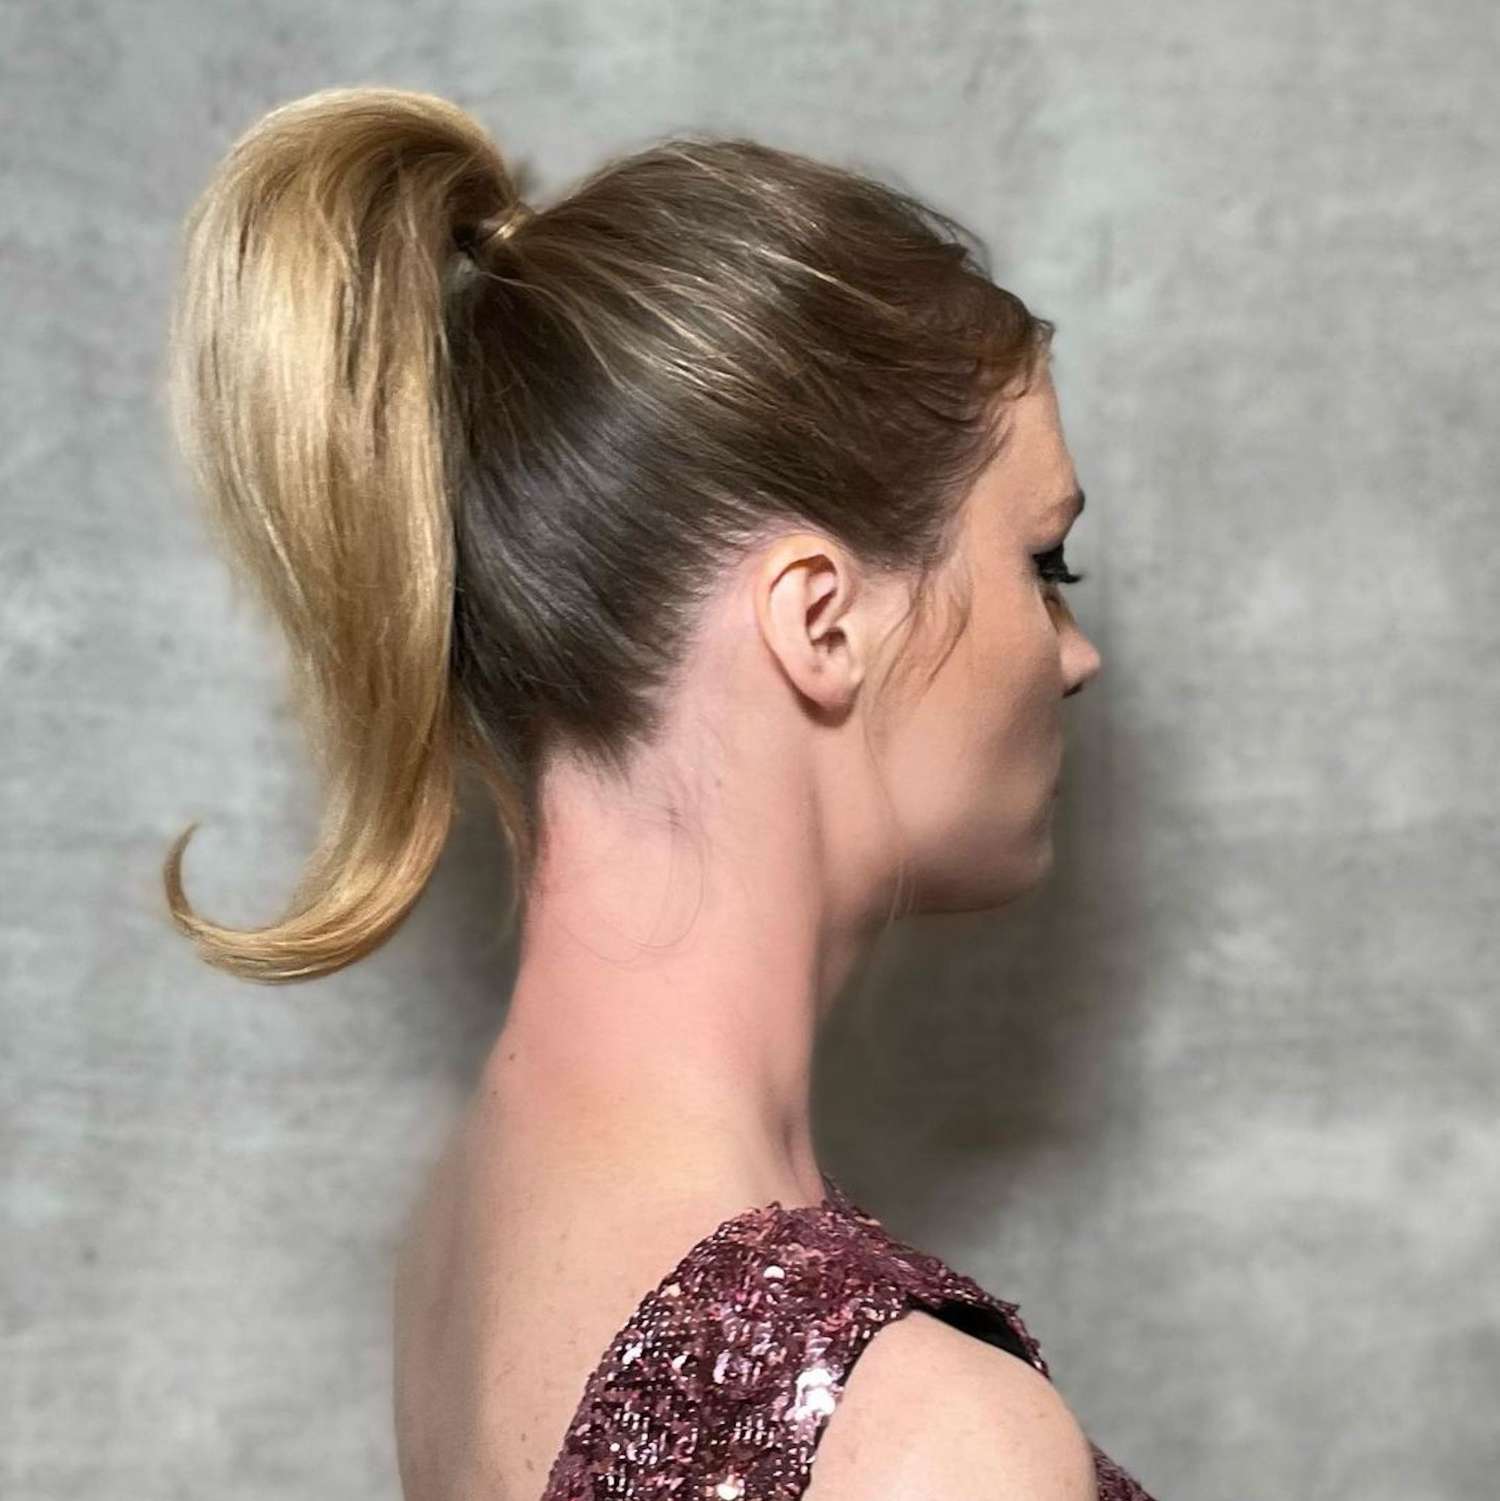 Model wears Barbie-inspired high ponytail